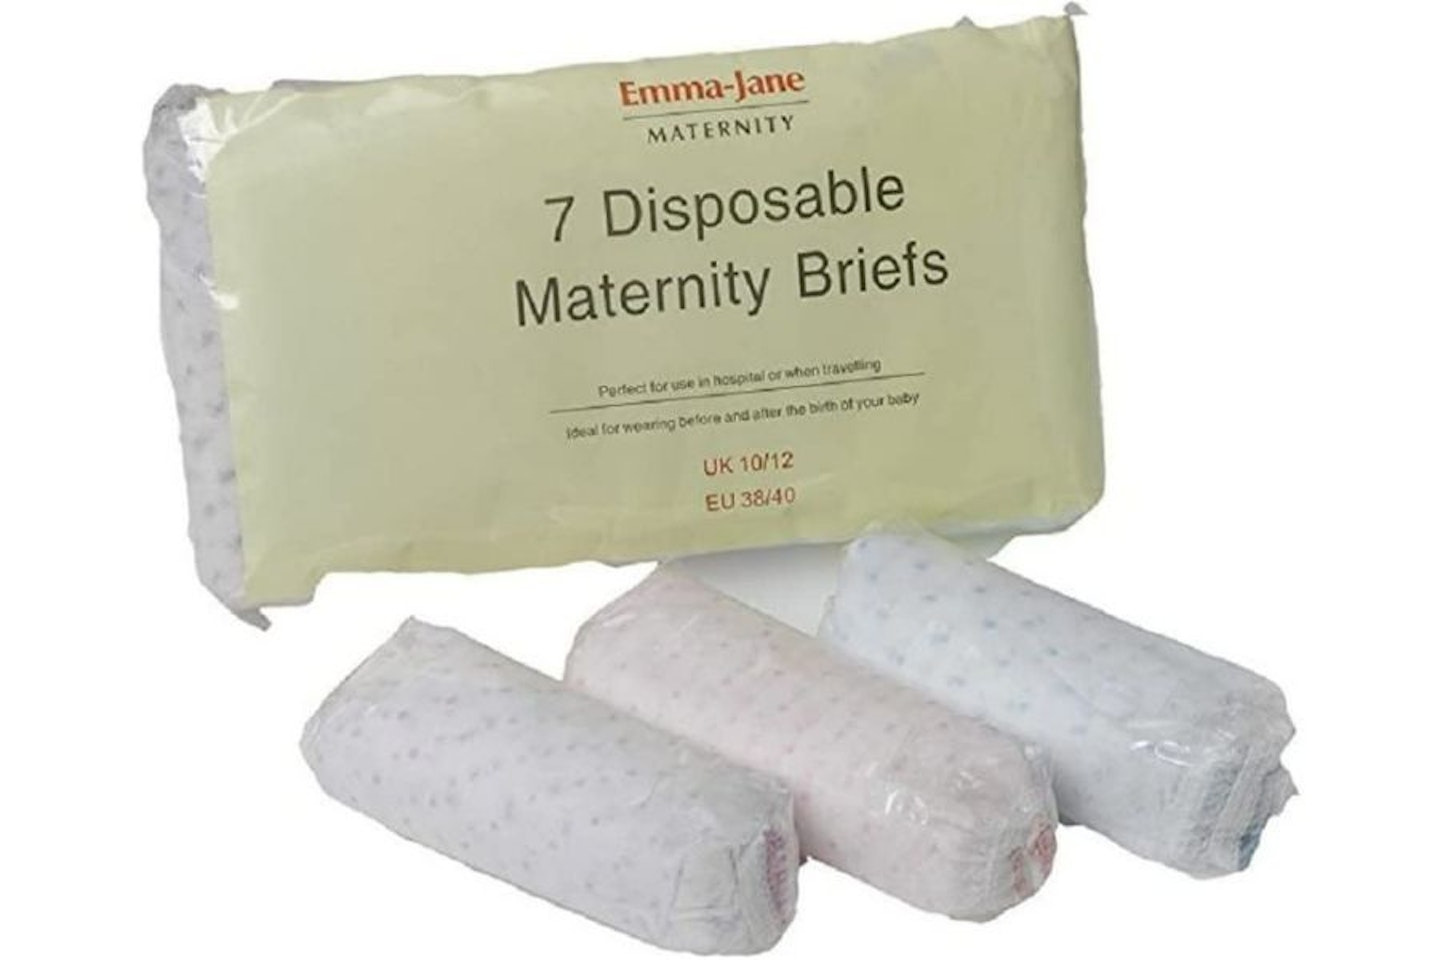 Maternity briefs